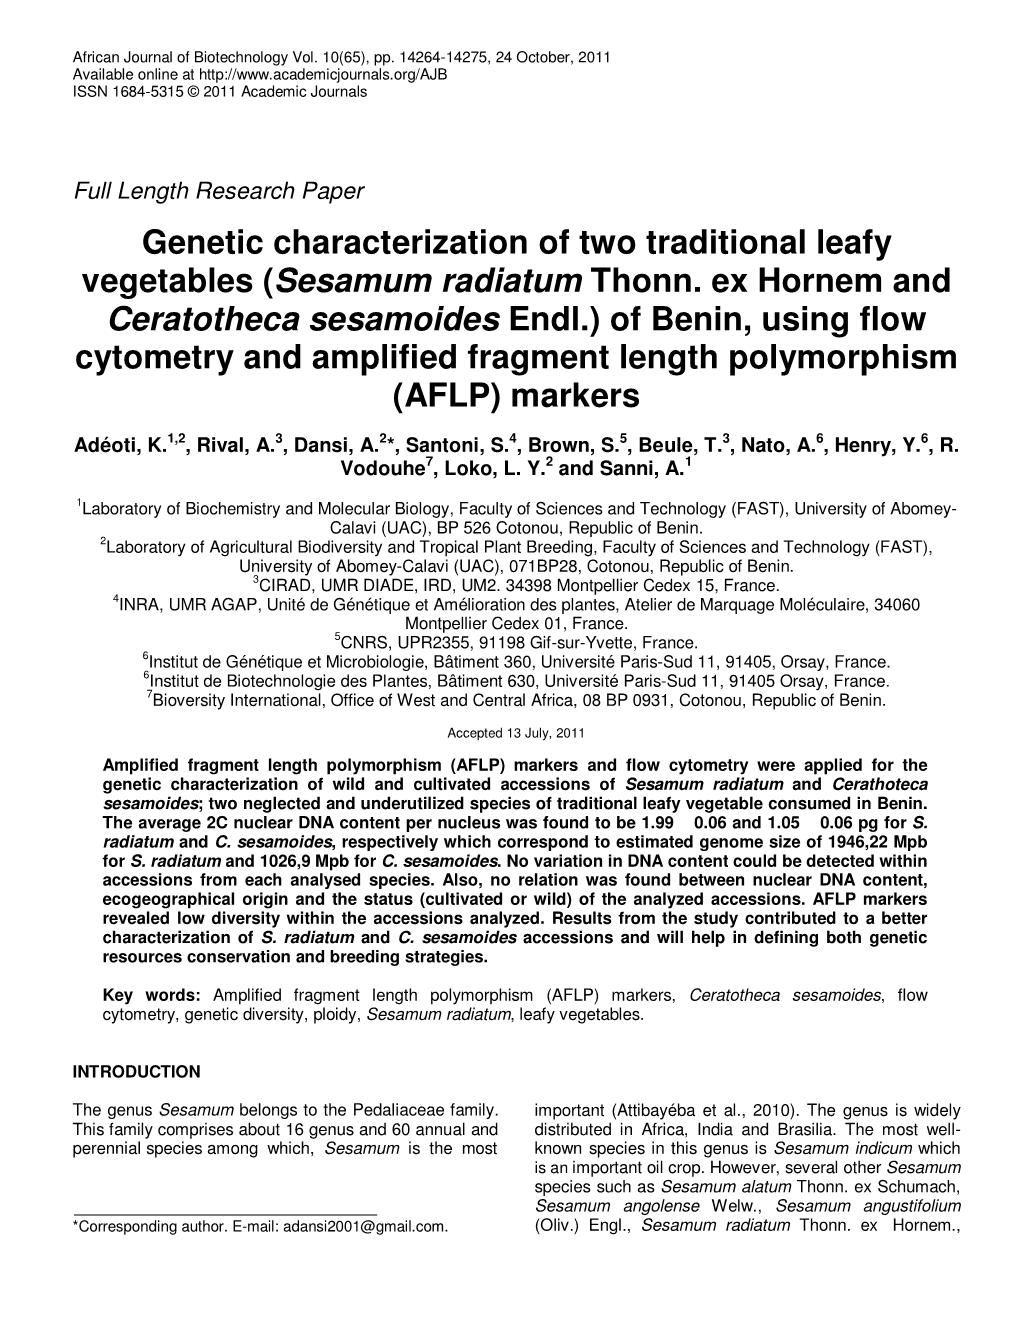 Sesamum Radiatum Thonn. Ex Hornem and Ceratotheca Sesamoides Endl.) of Benin, Using Flow Cytometry and Amplified Fragment Length Polymorphism (AFLP) Markers